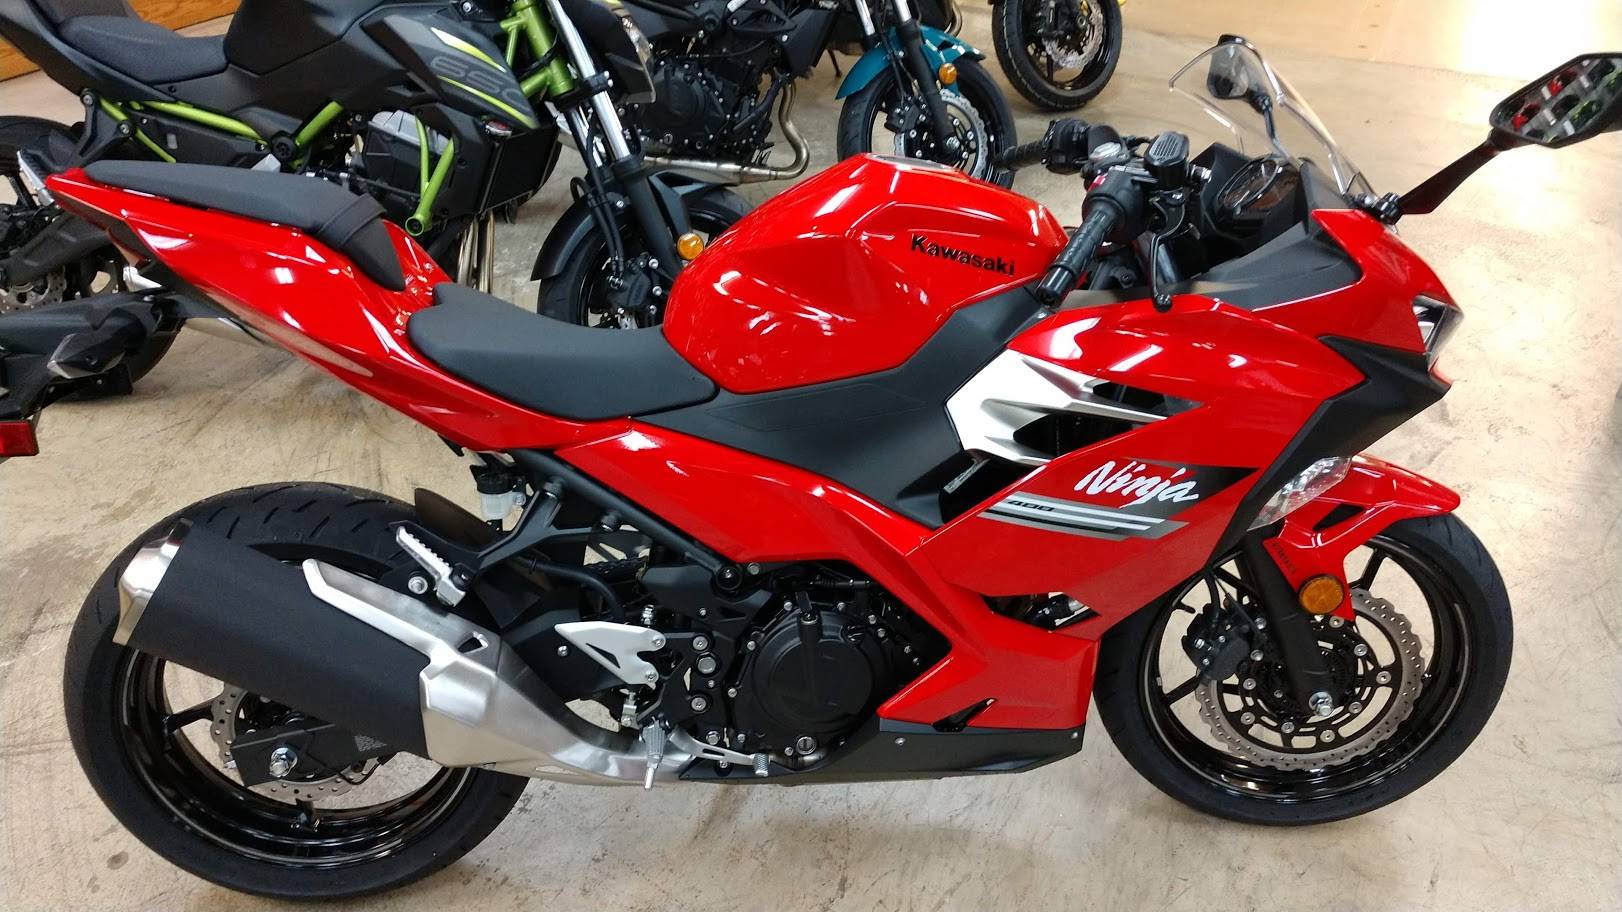 New 2021 Kawasaki Ninja 400 Abs Passion Red Motorcycles In Unionville Va Kawa96757